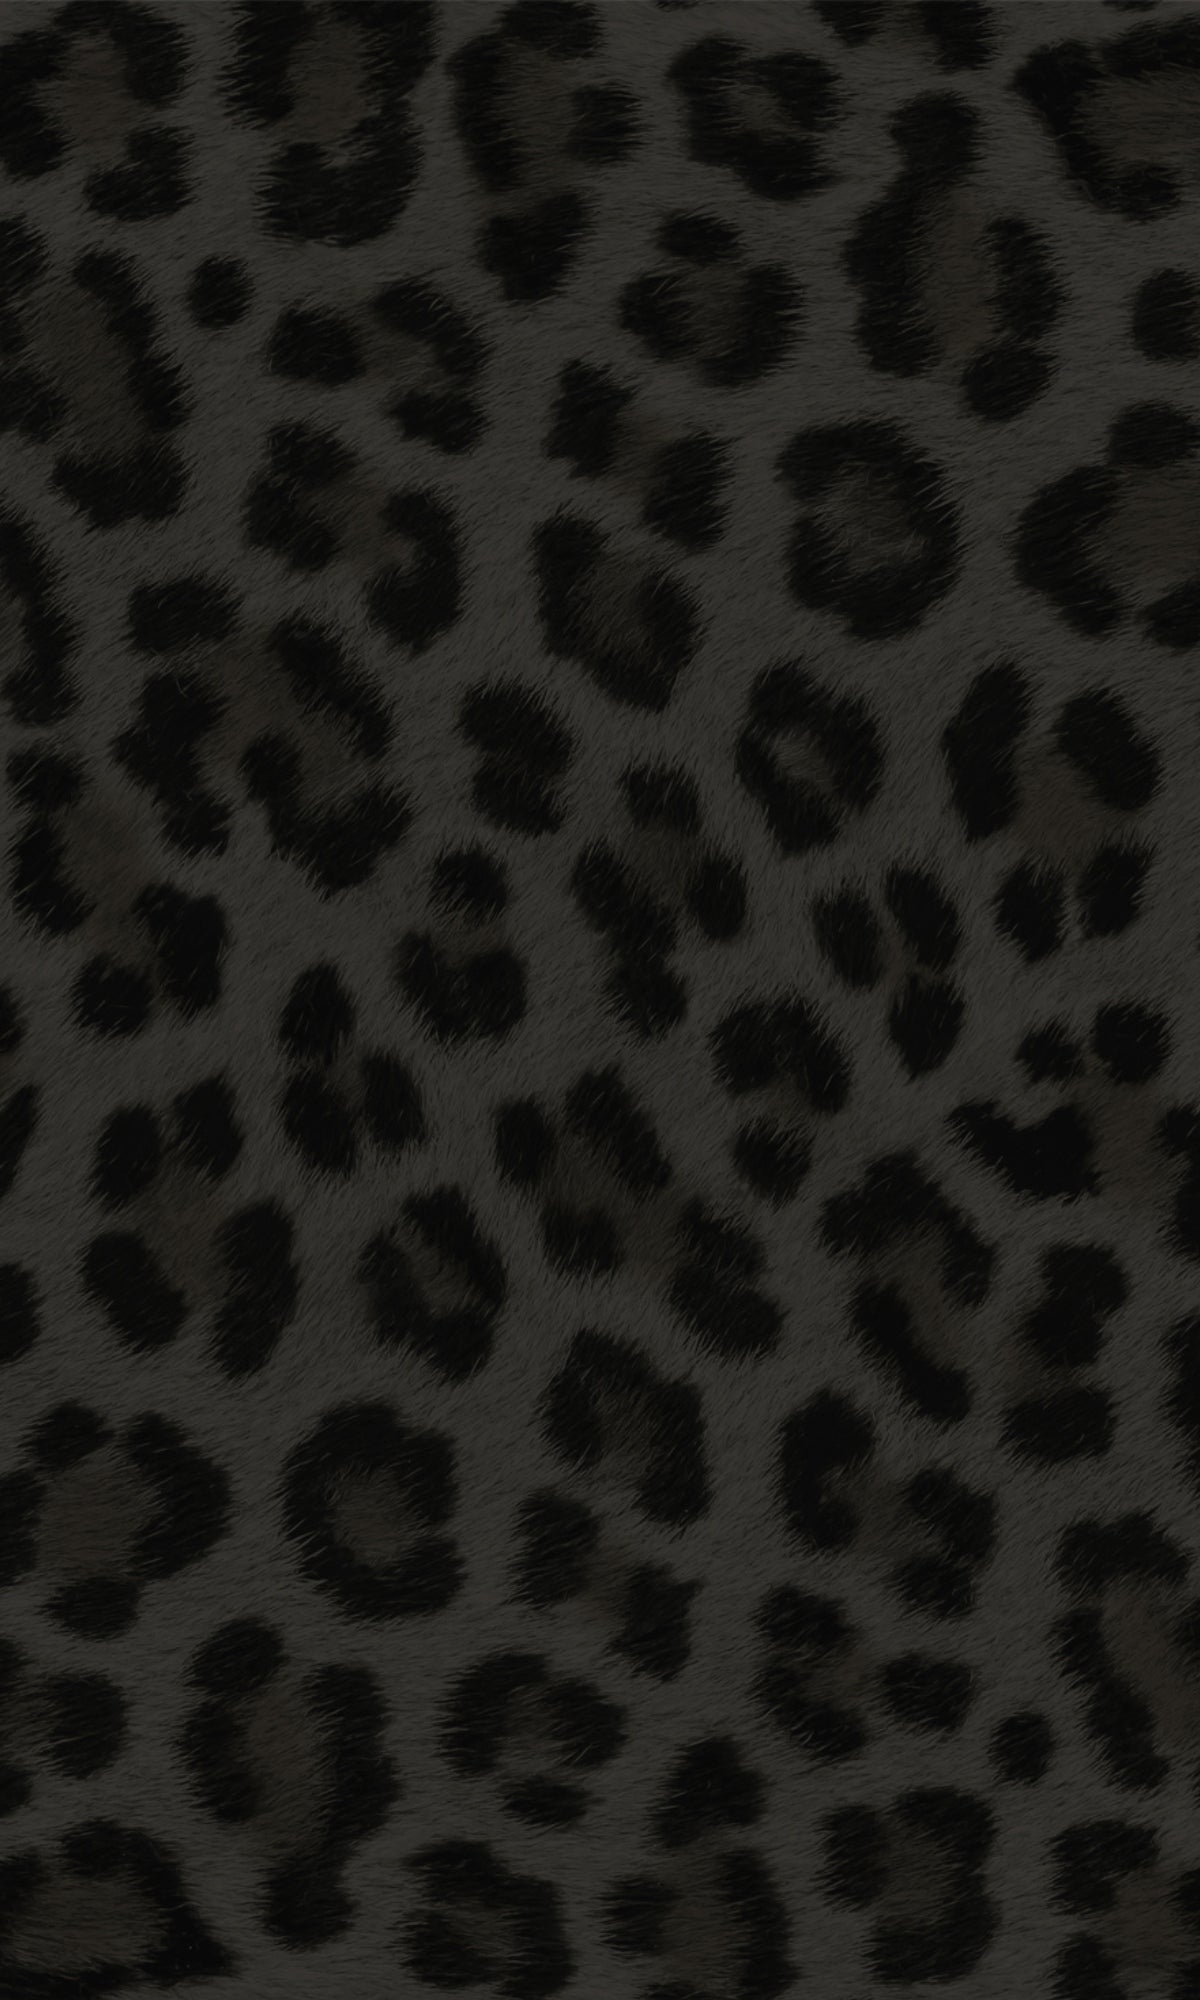 Leopard Metallic Animal Print wallpaper in black & gold